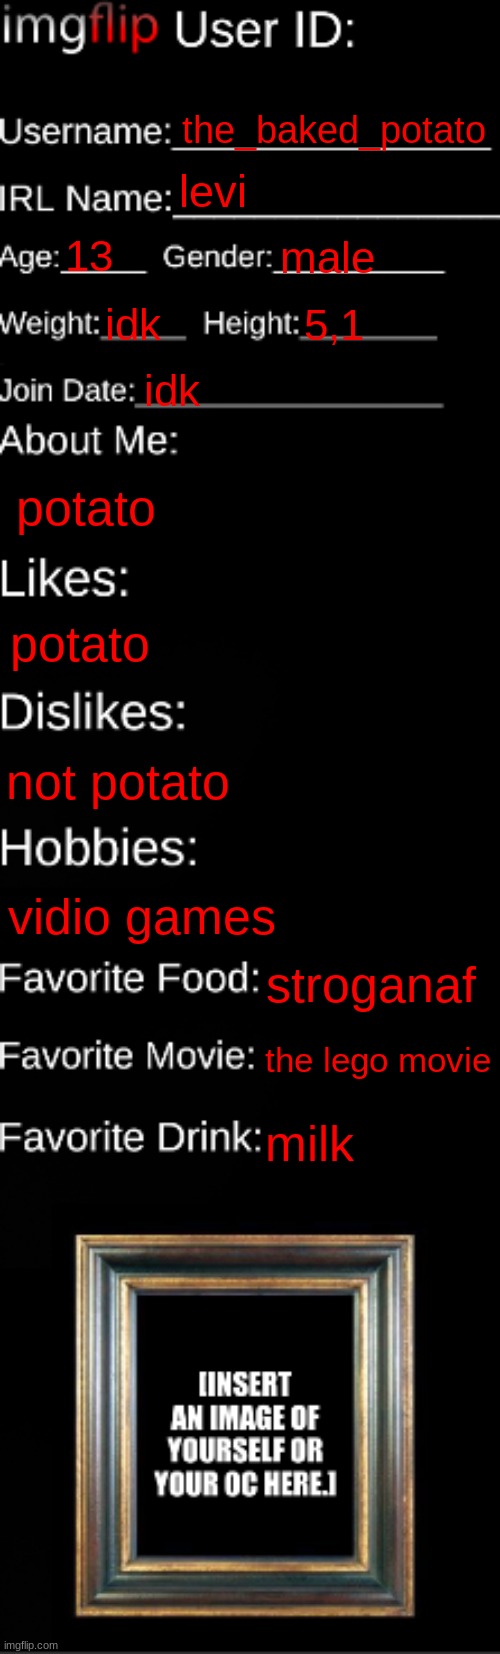 here's my id | the_baked_potato; levi; 13; male; idk; 5,1; idk; potato; potato; not potato; vidio games; stroganaf; the lego movie; milk | image tagged in imgflip id card | made w/ Imgflip meme maker